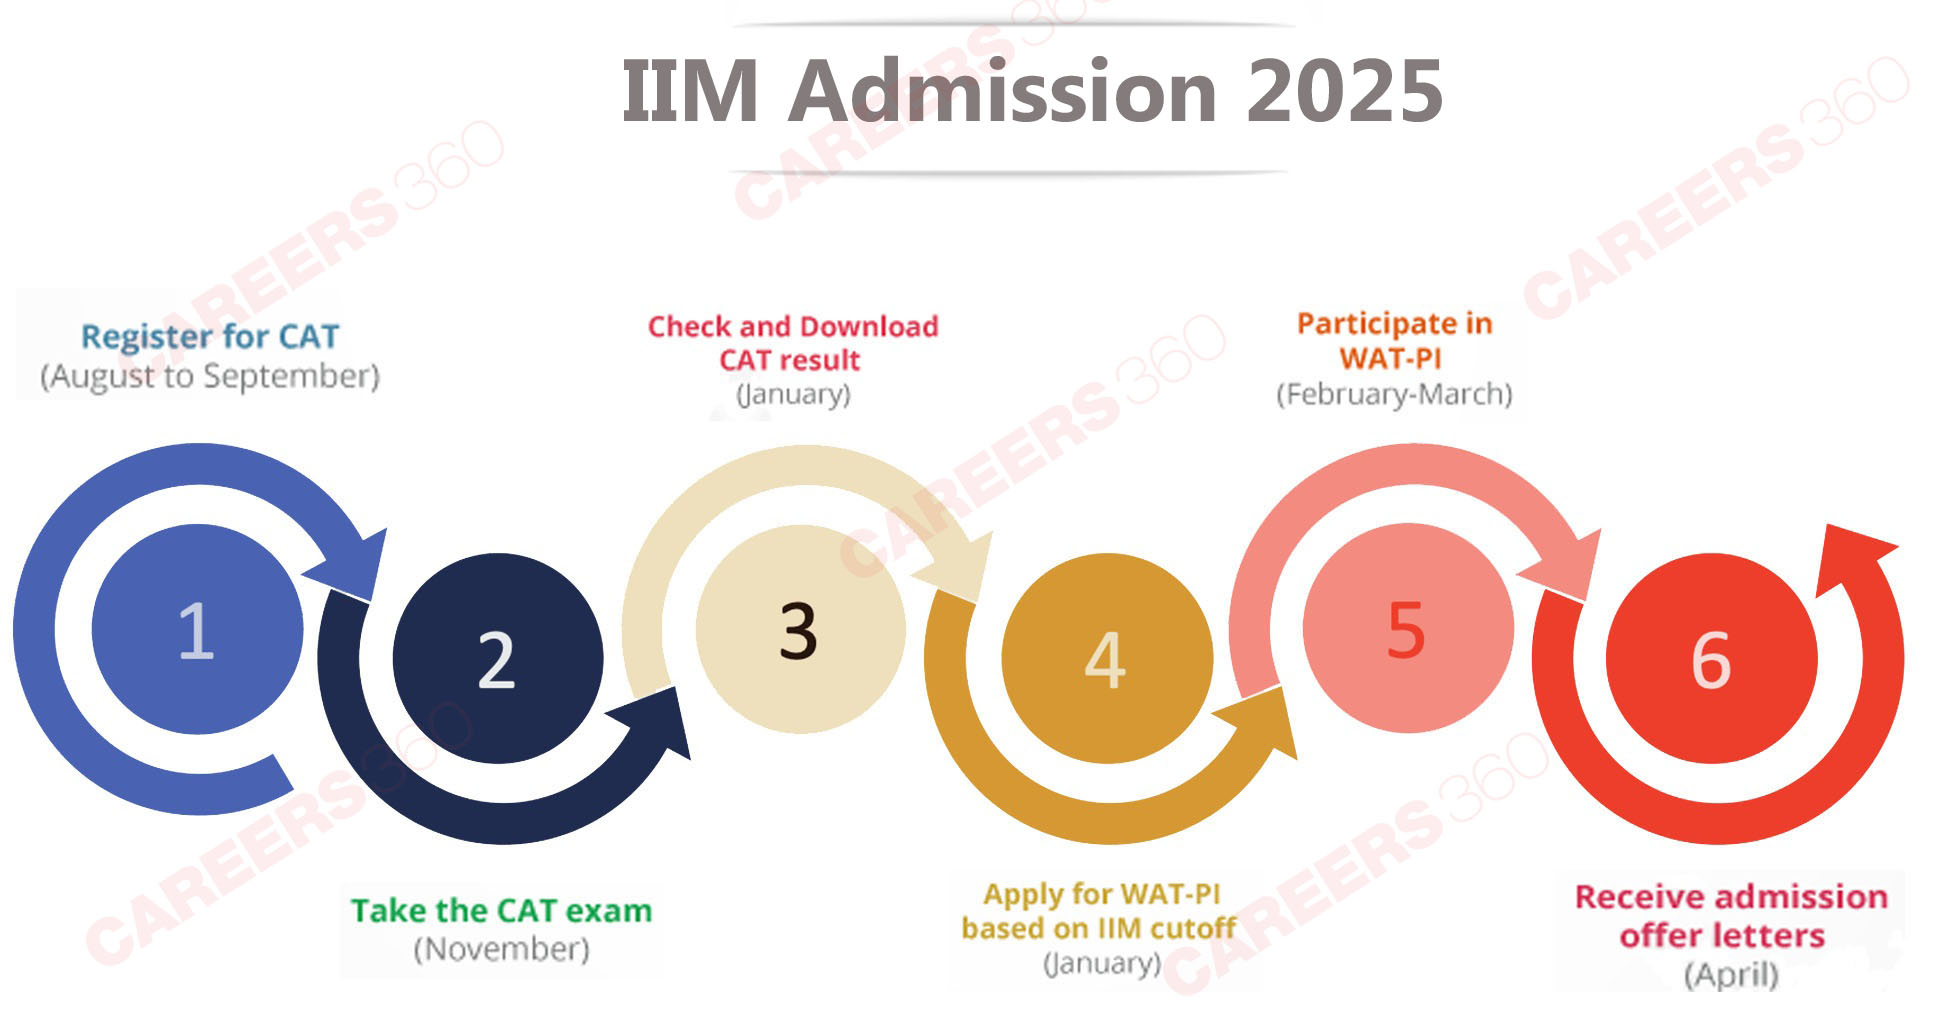 IIM Admission Criteria 2025